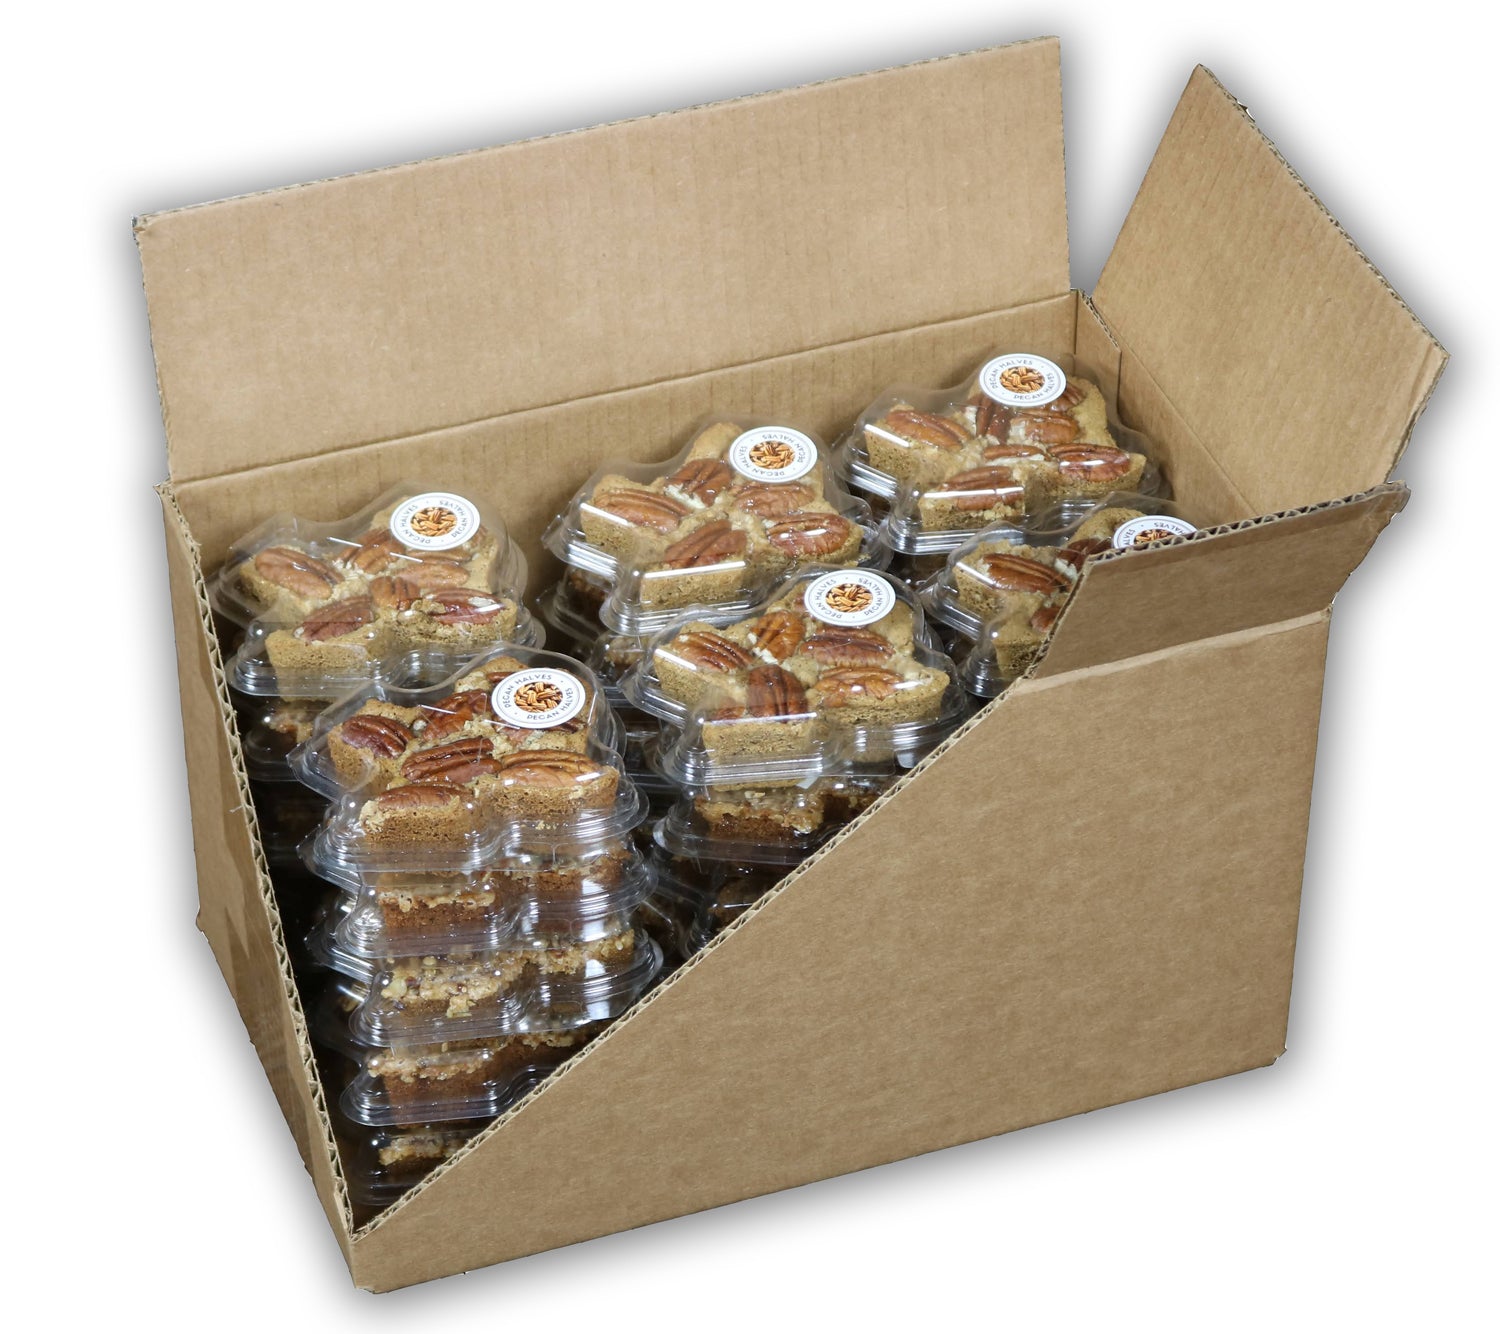 Small Cakes - Case of 24 - Texas Pecan Cakes